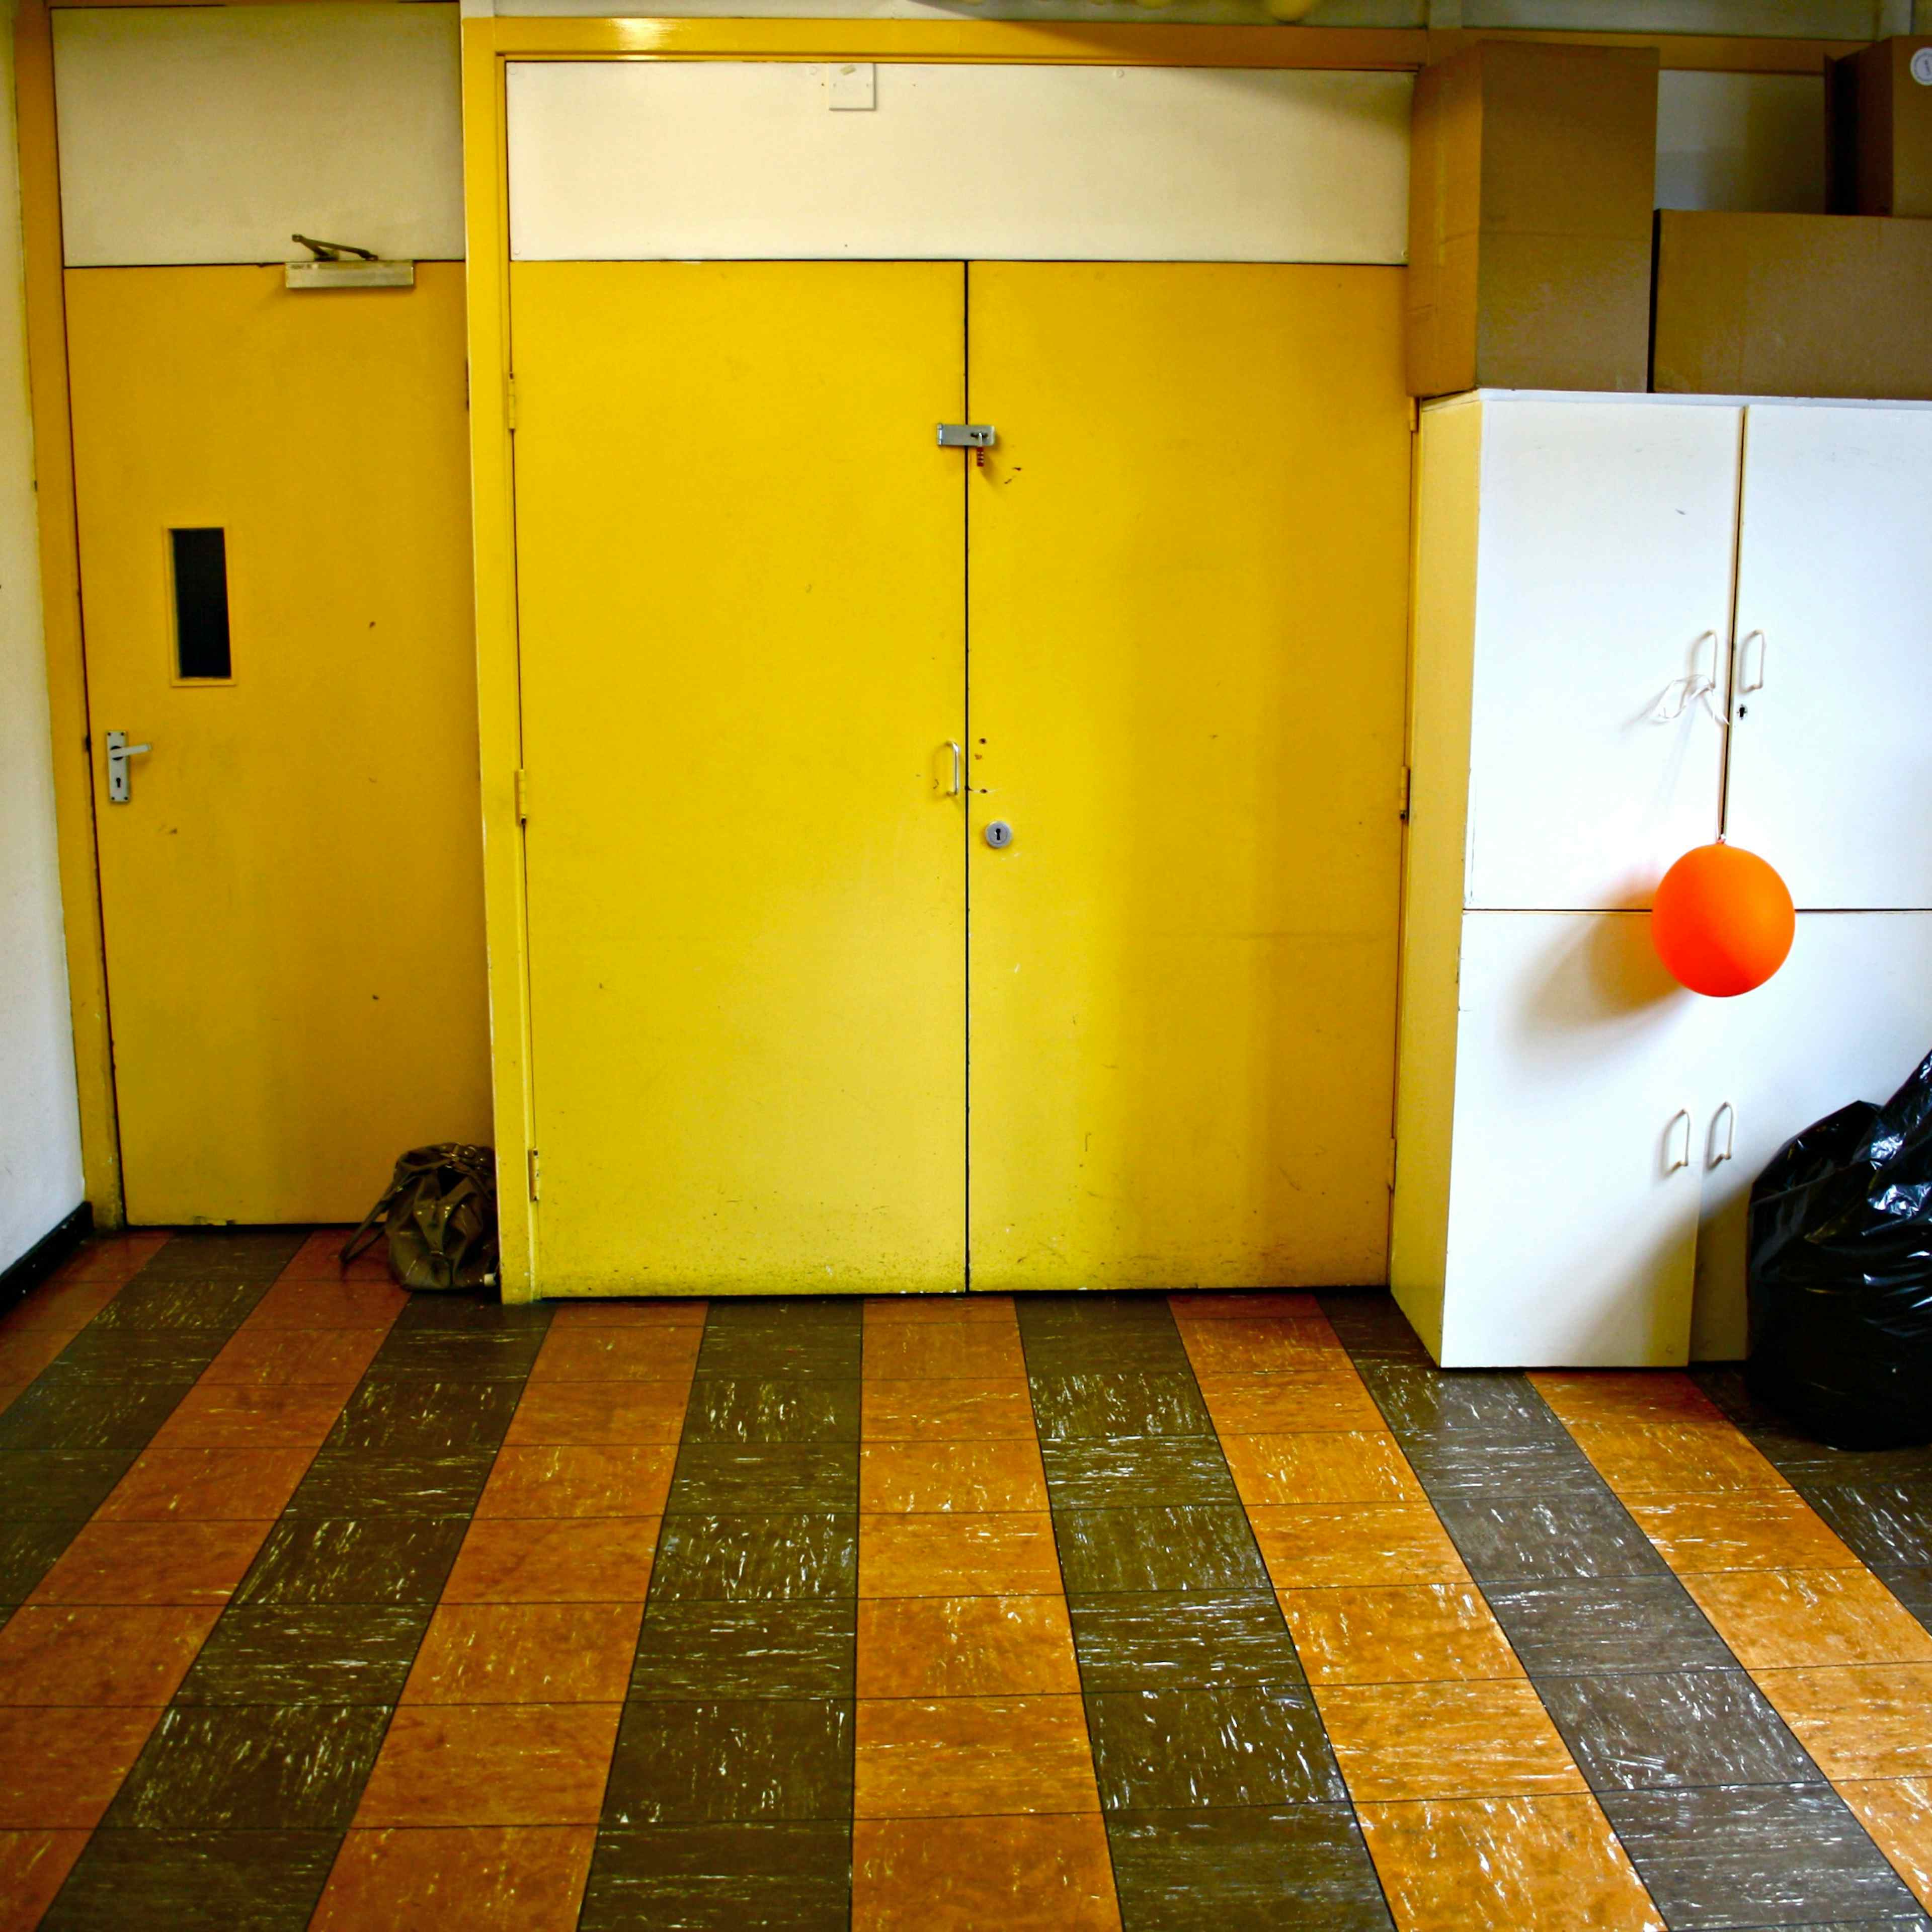 Chelsea Theatre - The Yellow Room image 2